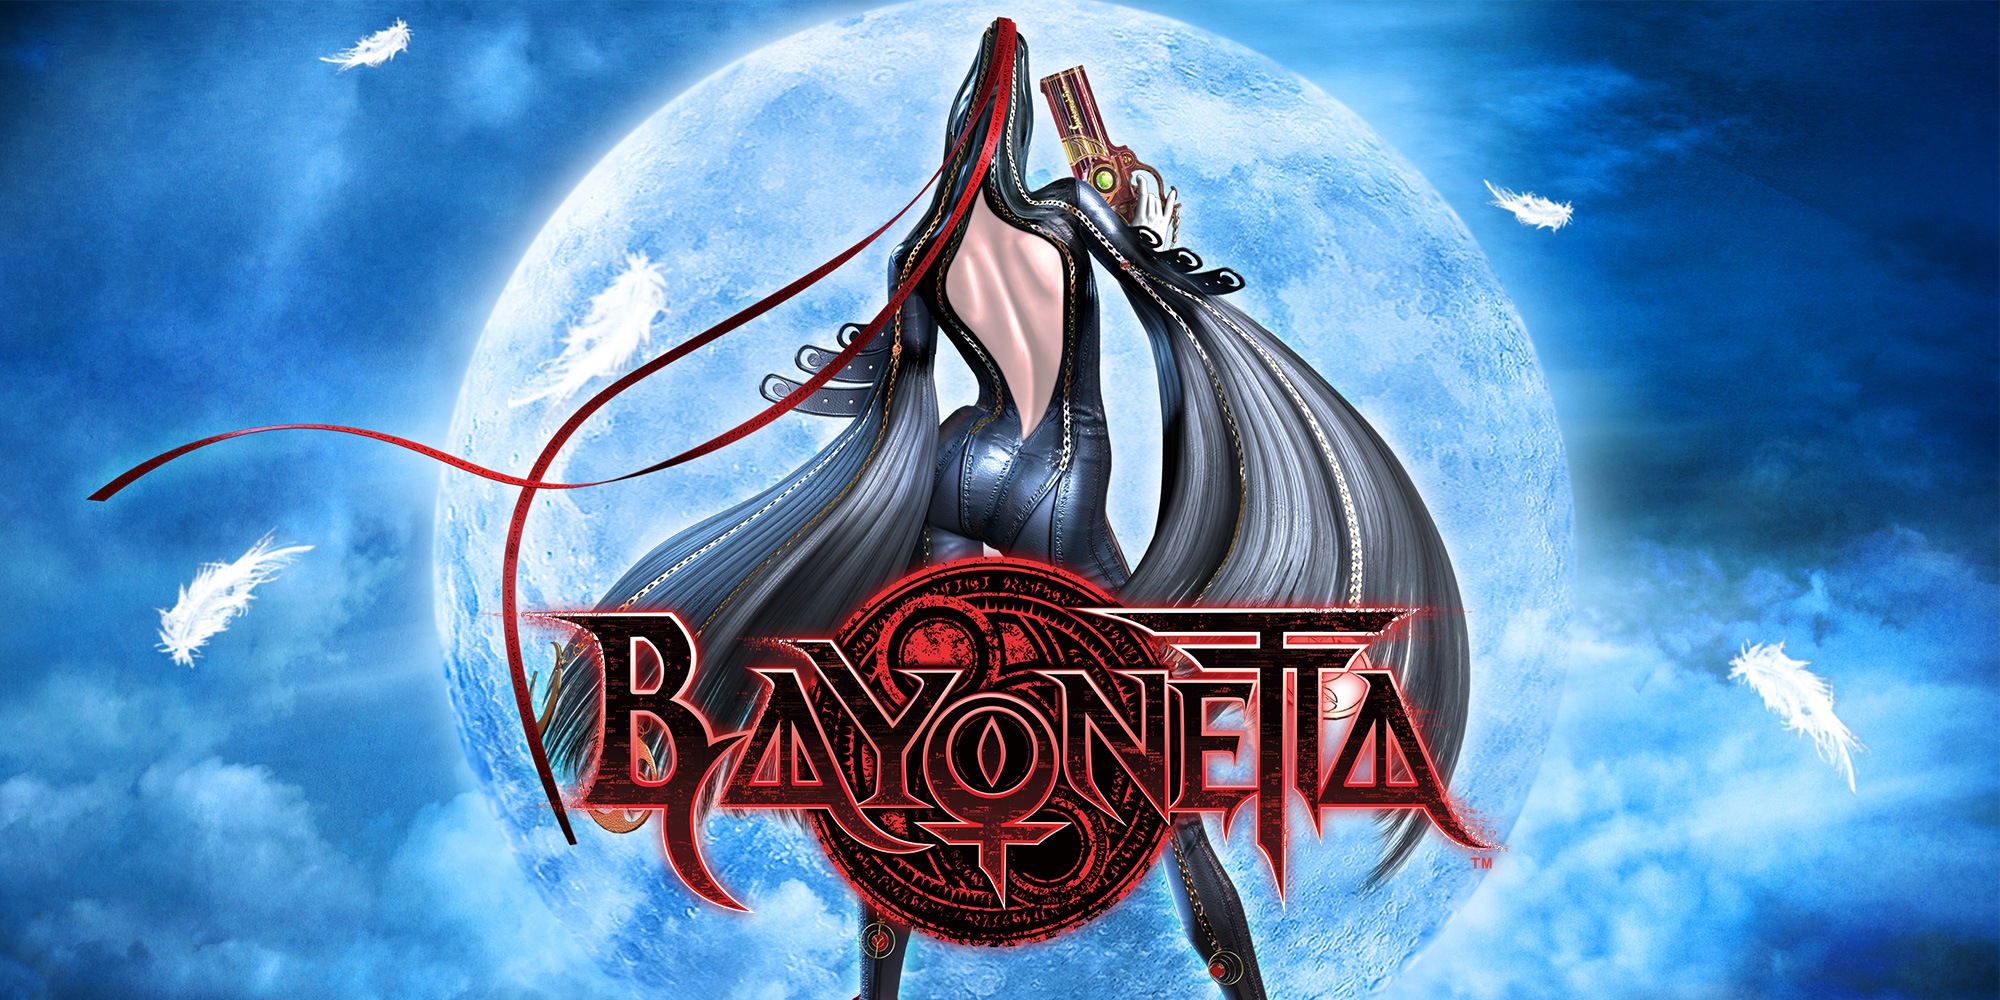  Bayonetta & Vanquish 10th Anniversary Bundle: Standard